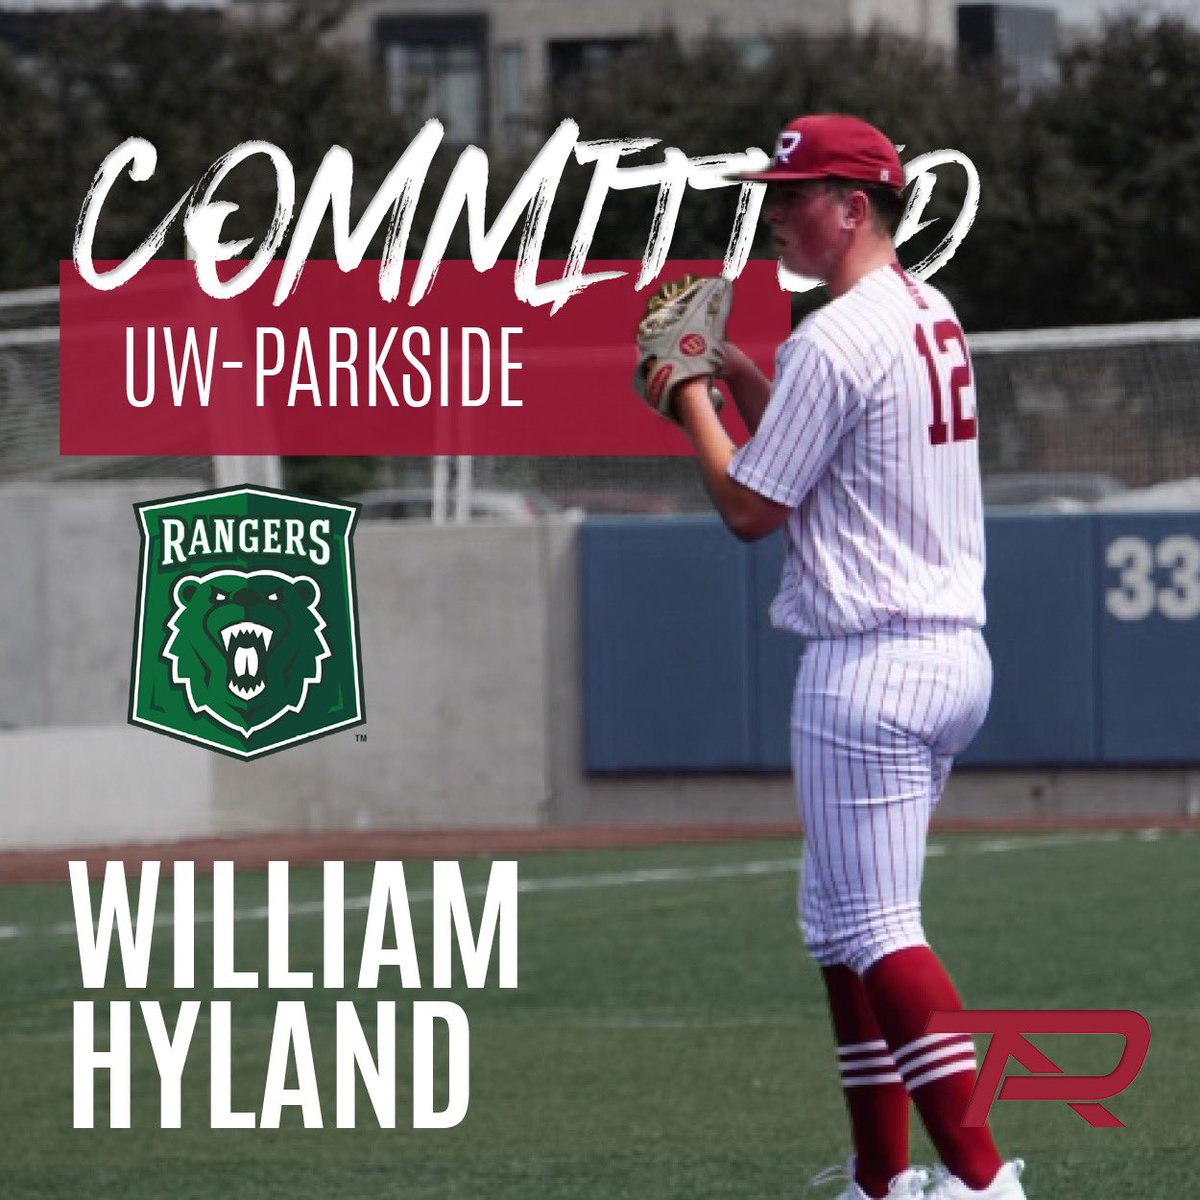 ❗COMMITMENT ALERT❗

Congratulations to 2023 Pitcher William Hyland of Oak Creek High School for committing to UW-Parkside!

#PTAway #CommitmentAlert #KeepPushingForward @uwpbaseball @William_hyland1 @ocreekbaseball